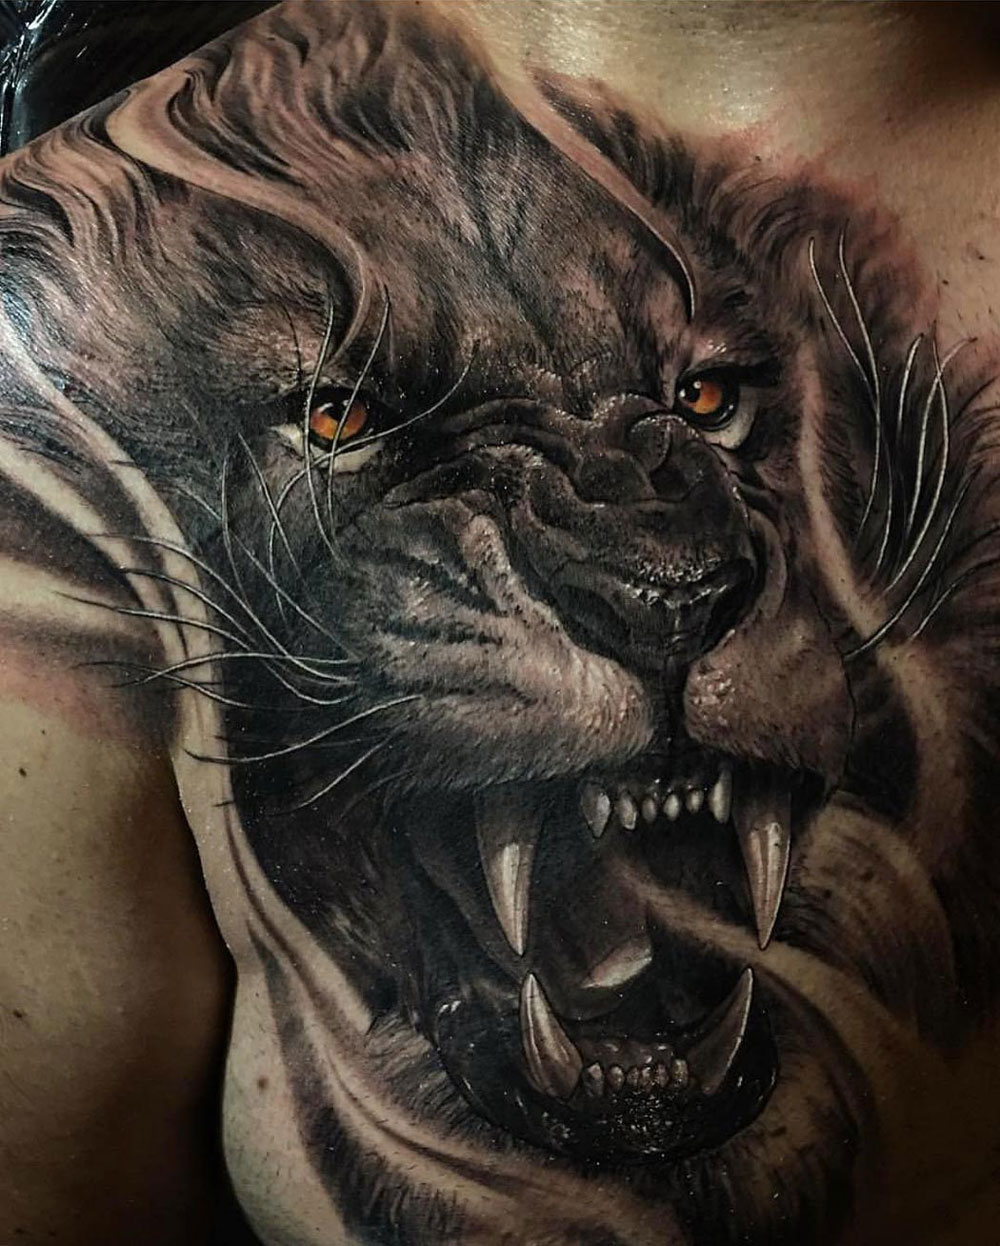 Roaring Lion | Best tattoo design ideas